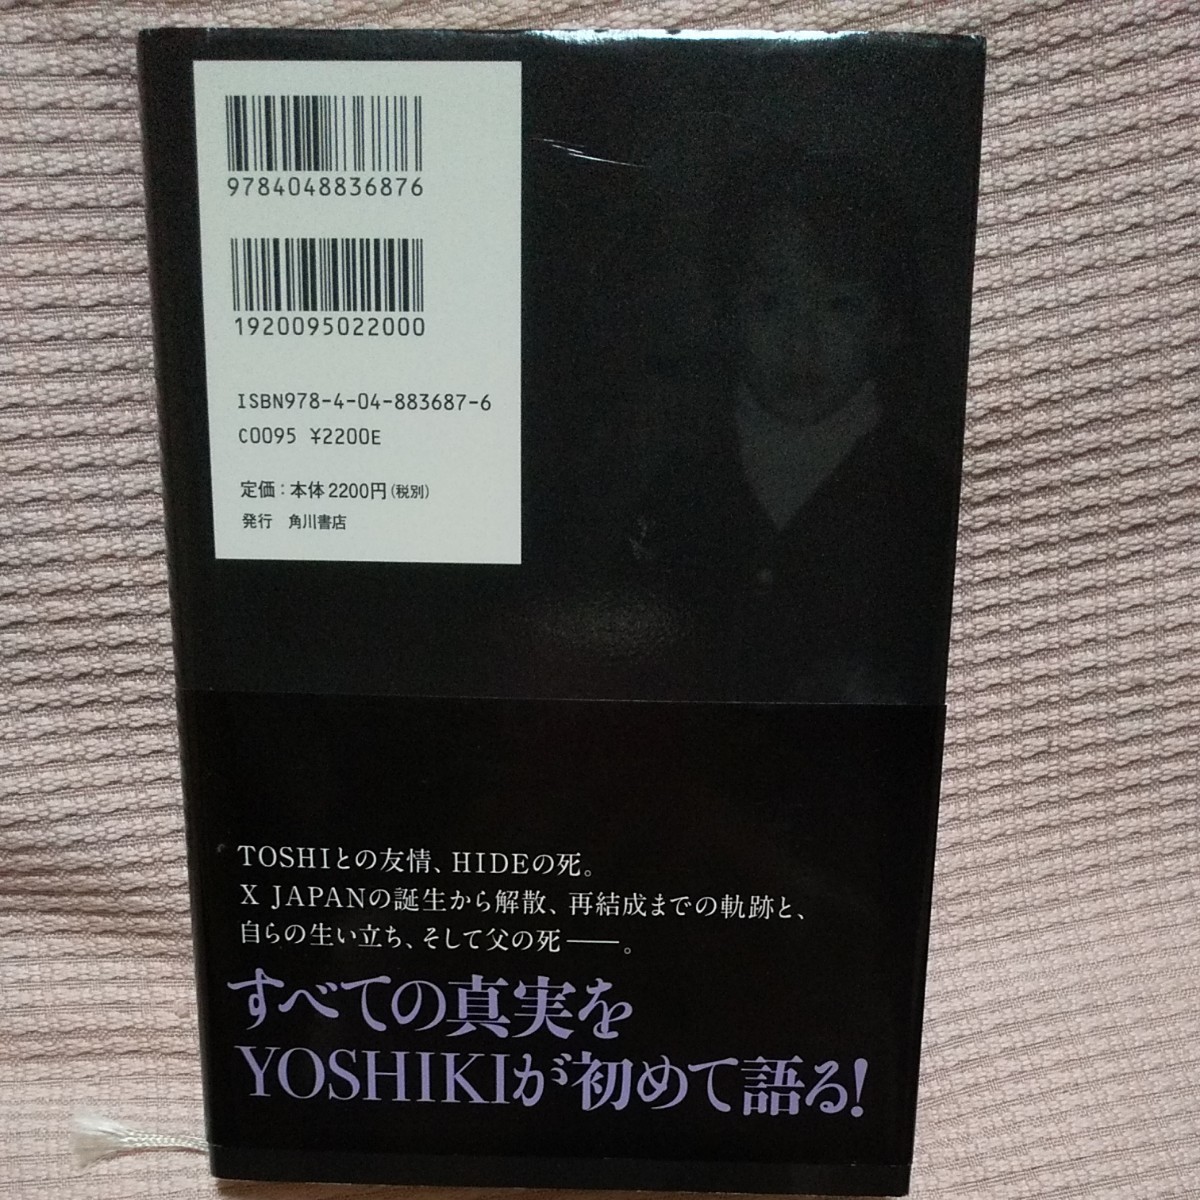 「YOSHIKI / 佳樹 」 小松成美